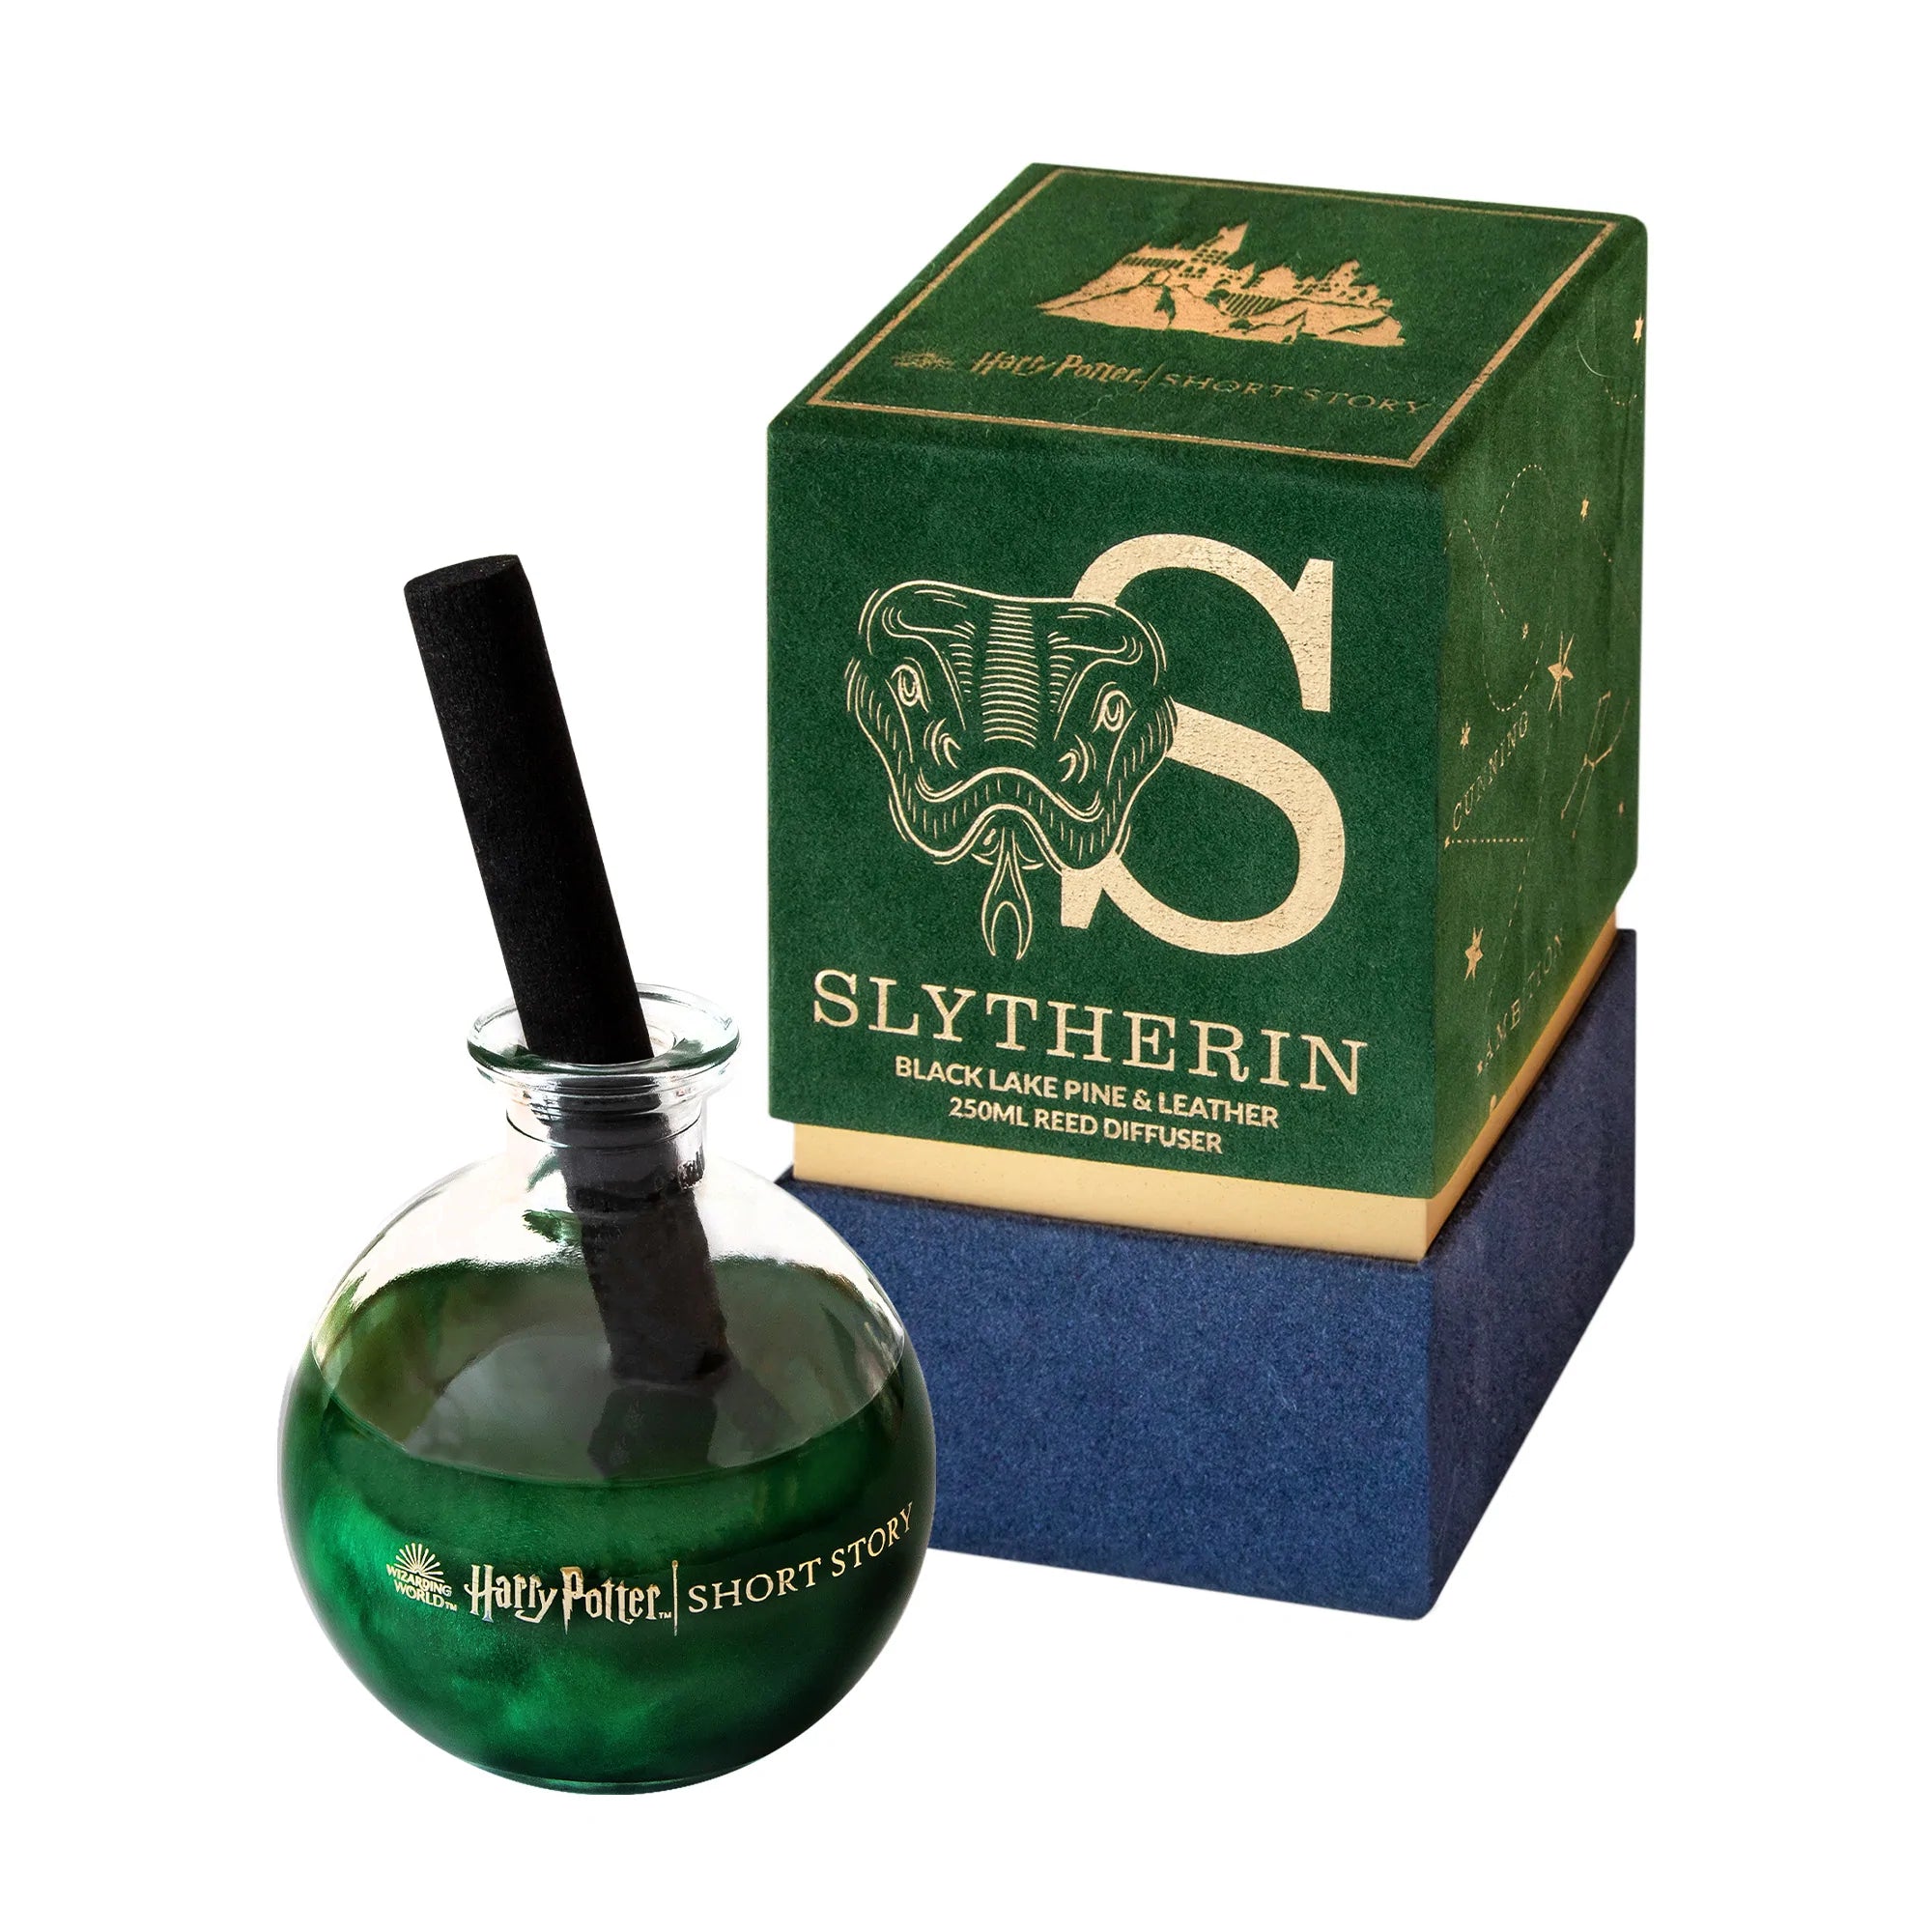 Harry Potter Diffuser - Slytherin (Black Lake Pine & Leather)